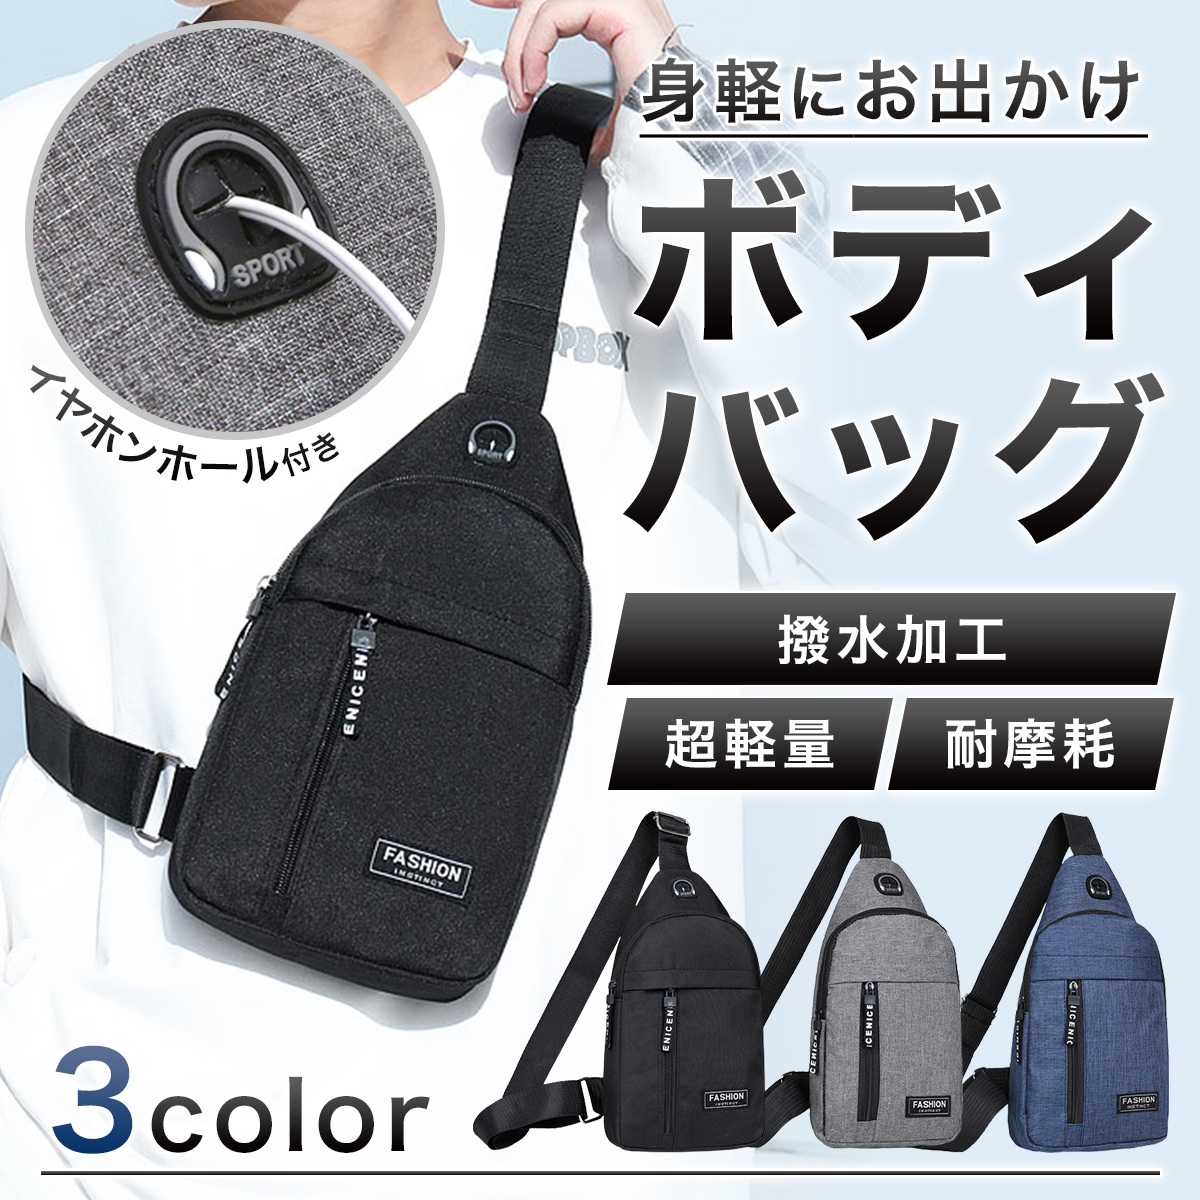  shoulder bag body bag men's lady's diagonal .. smartphone pouch waist bag waterproof high capacity 